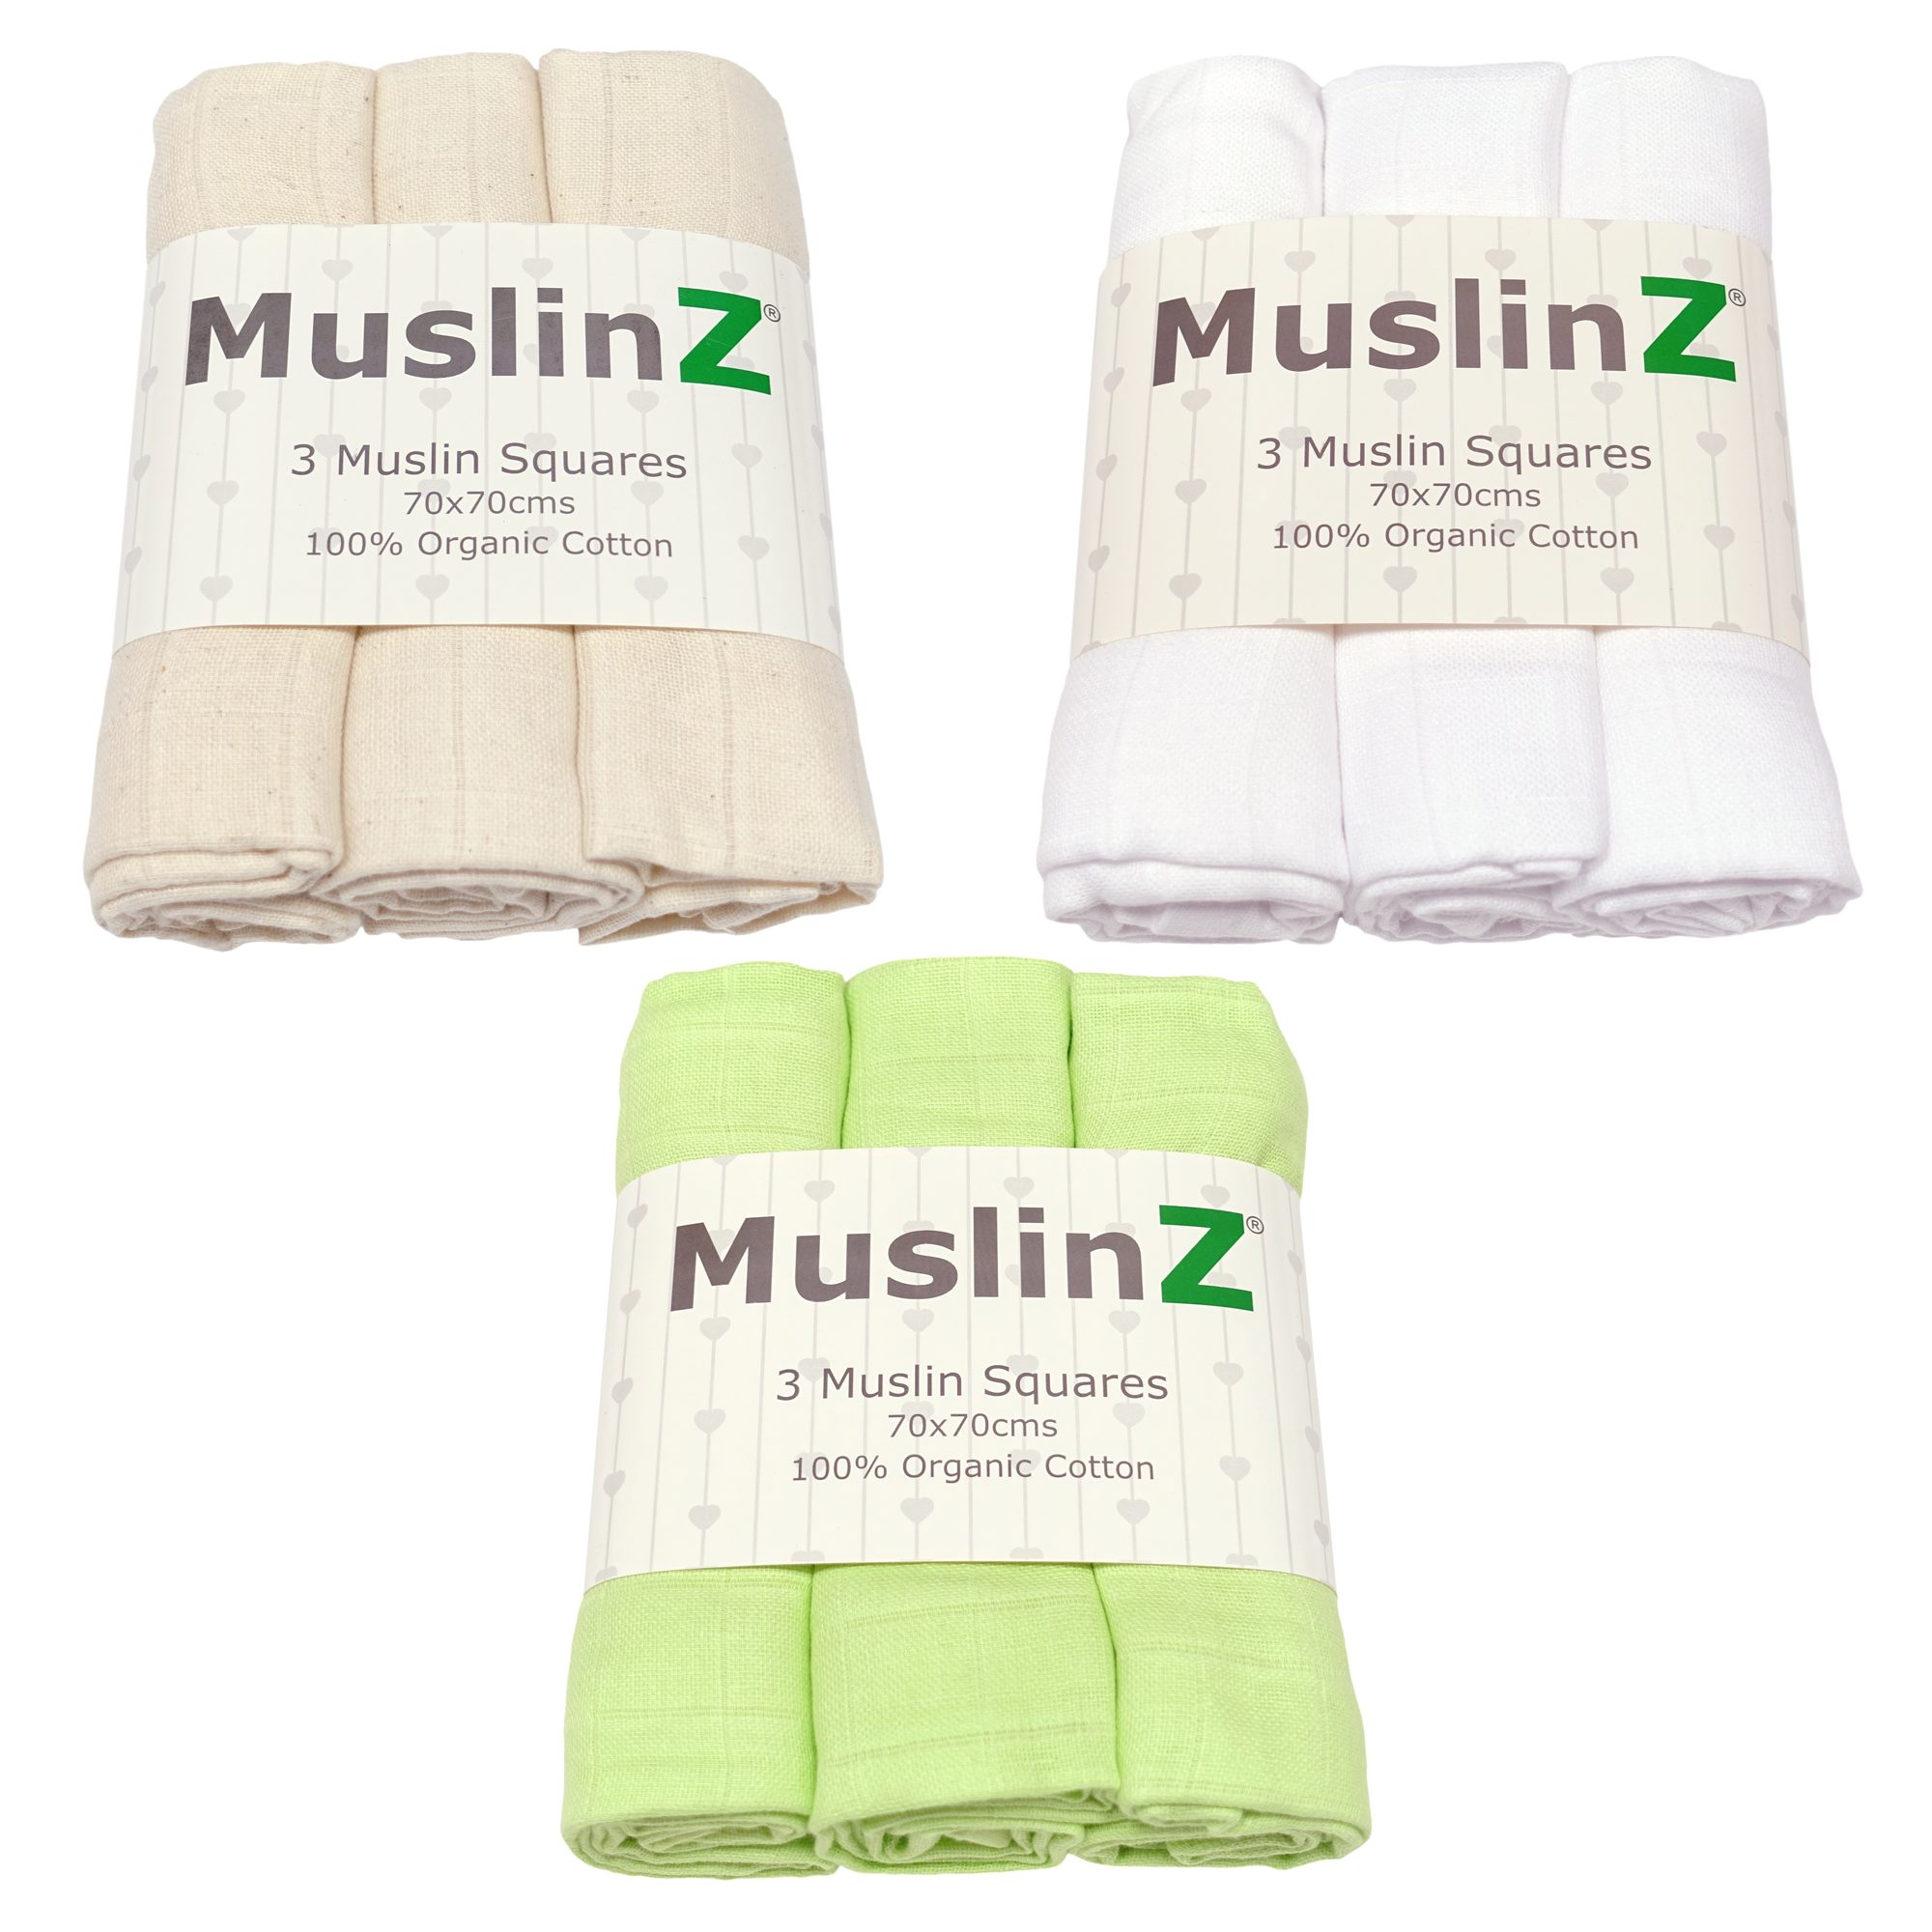 MuslinZ new 100 per cent cotton range